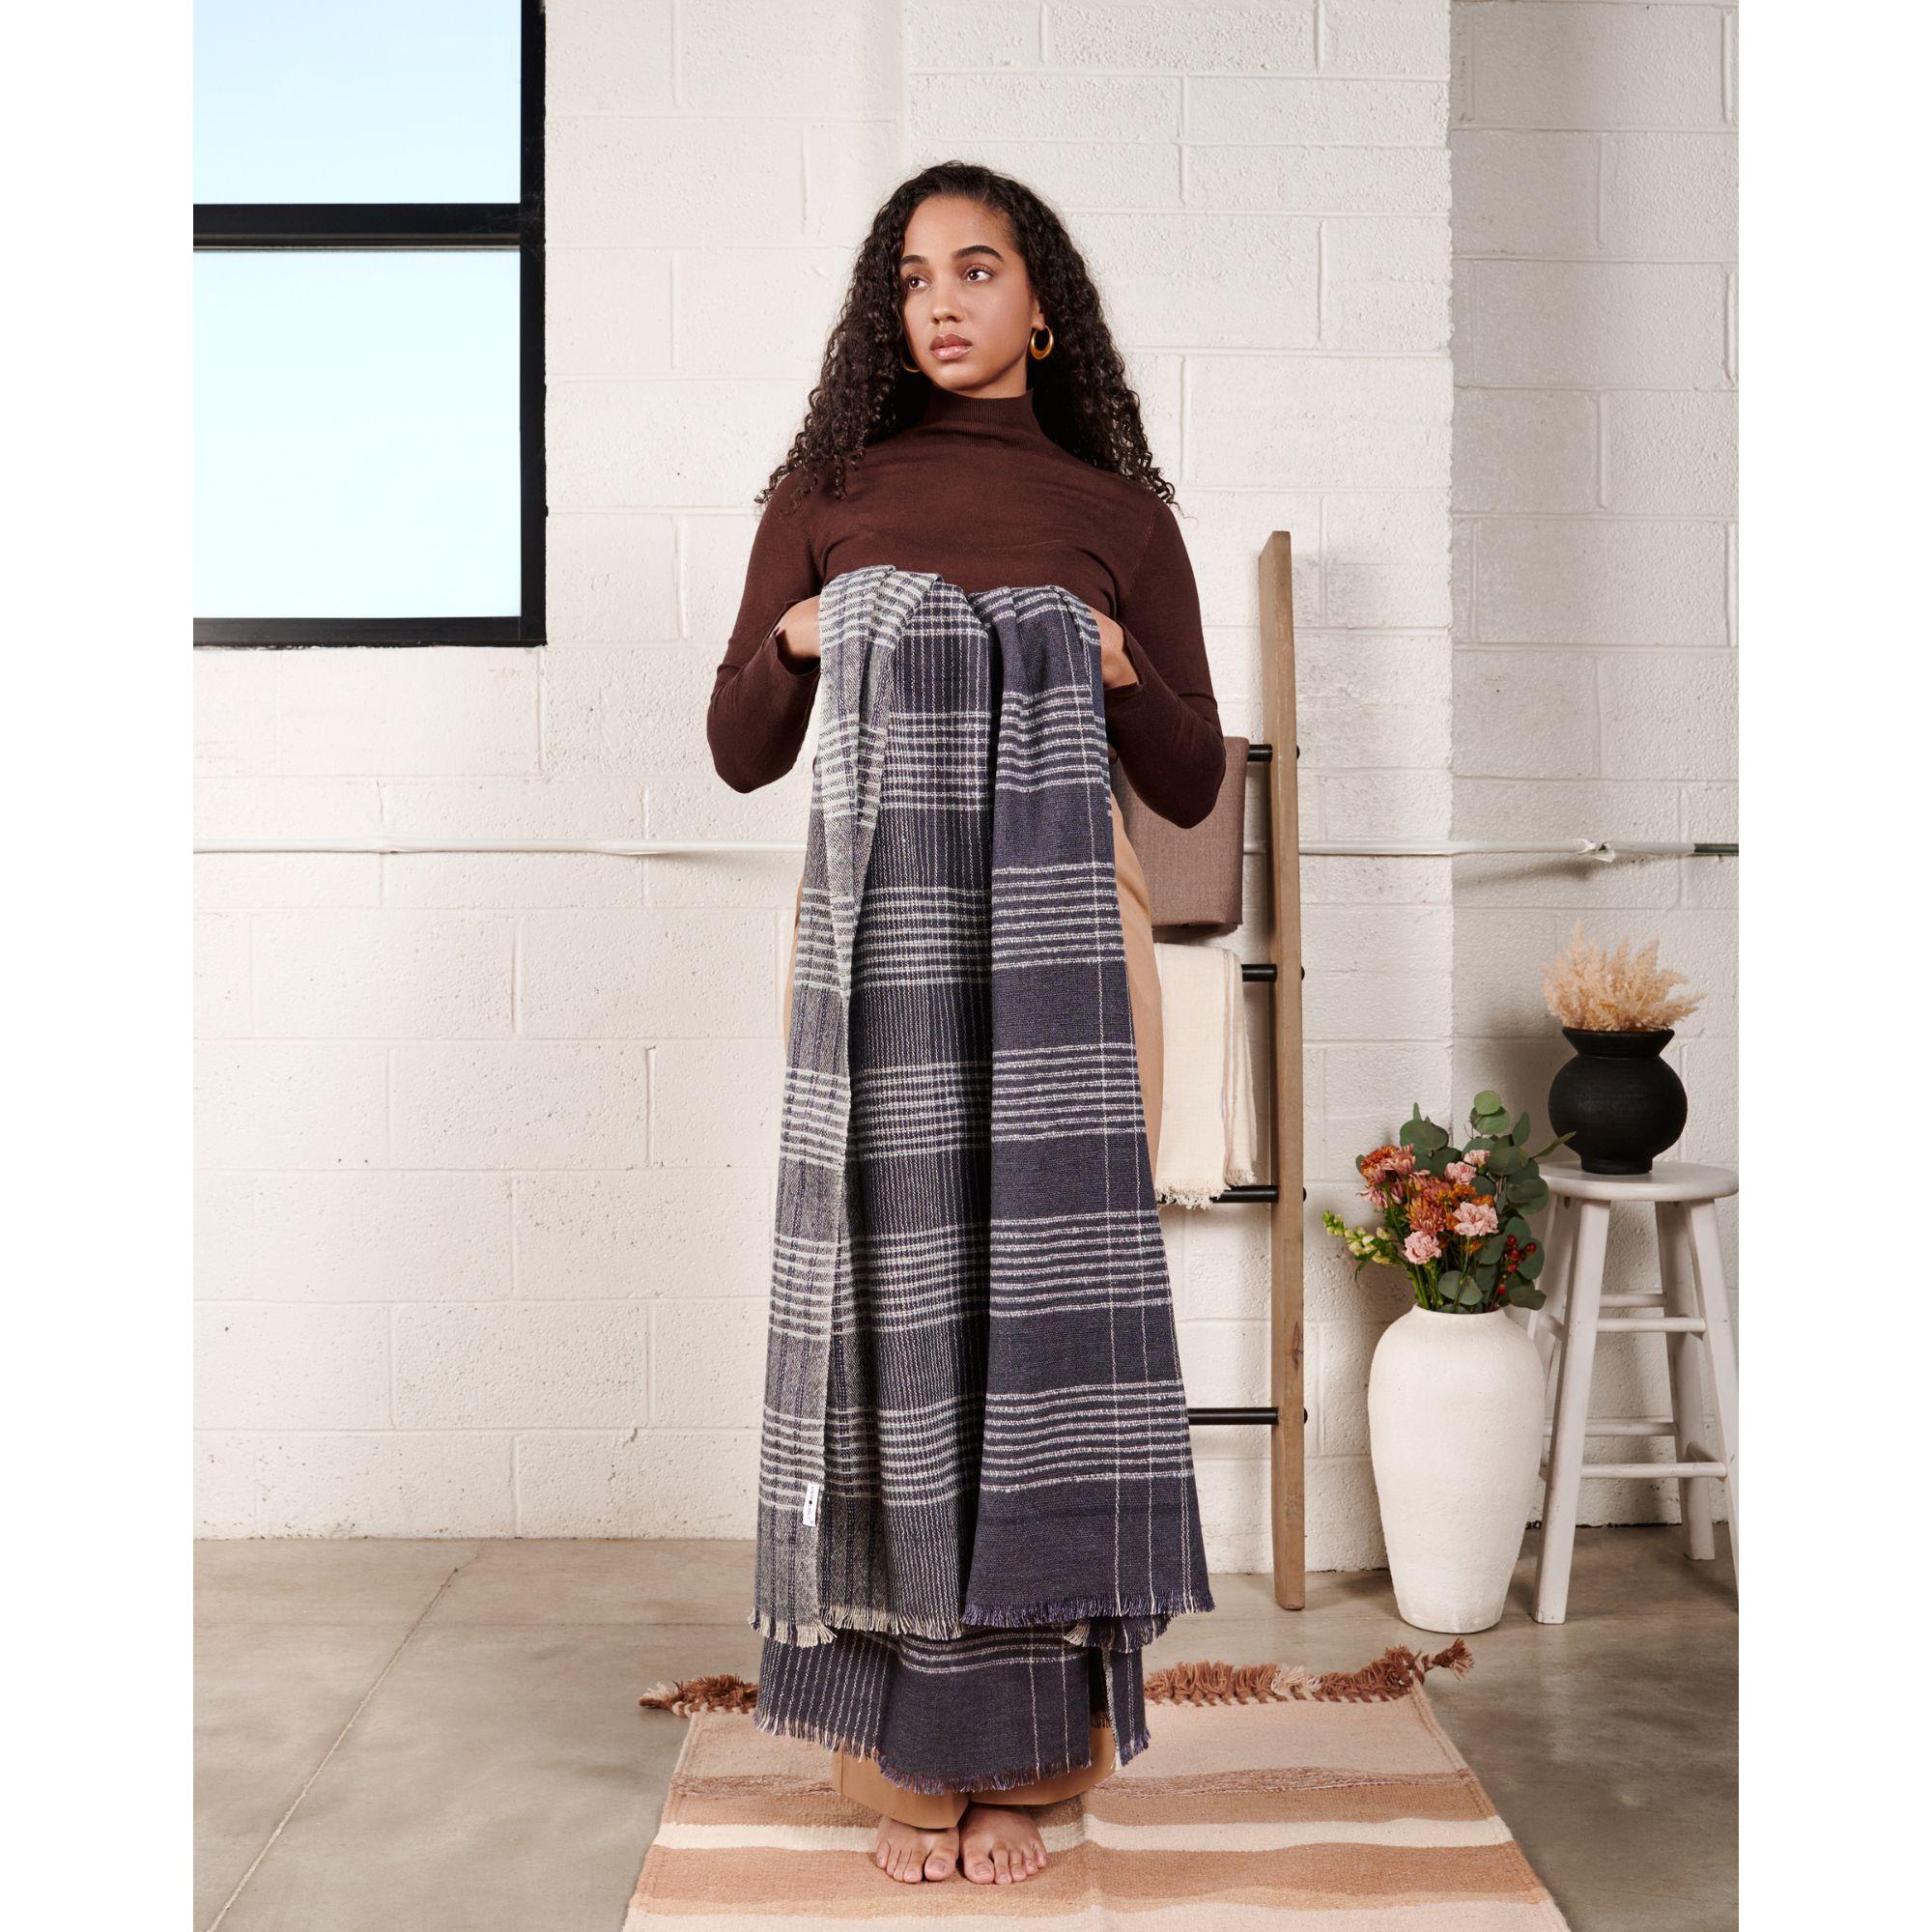 Hand-Woven Alloy Handloom Throw in Pure Merino Linen Blend For Sale